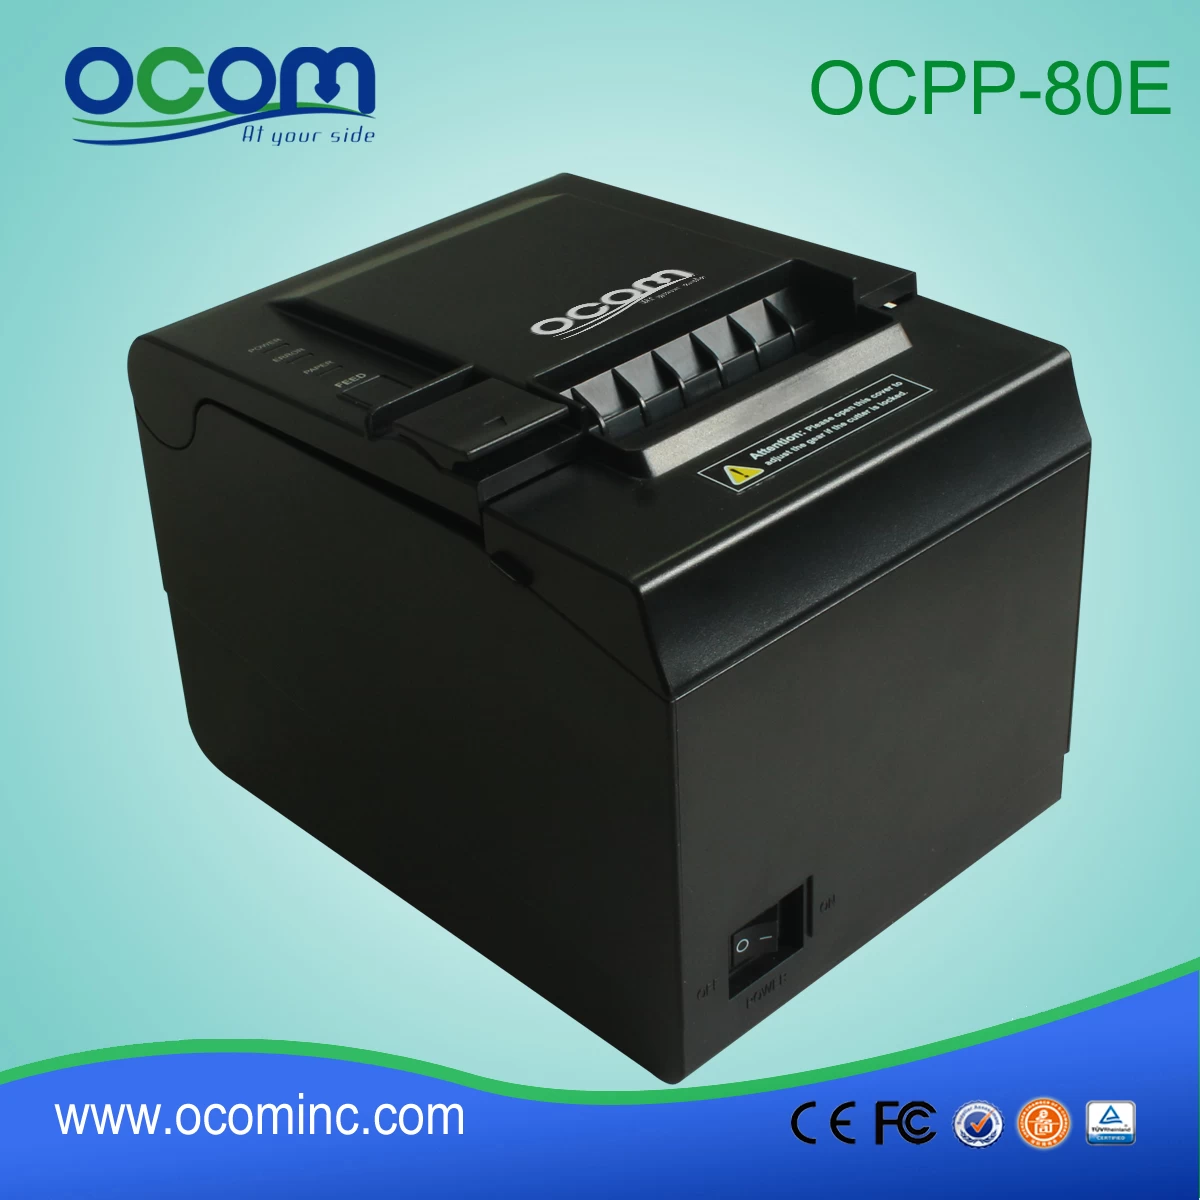 China Manufacturer thermal pos receipt printer (OCPP-80E)